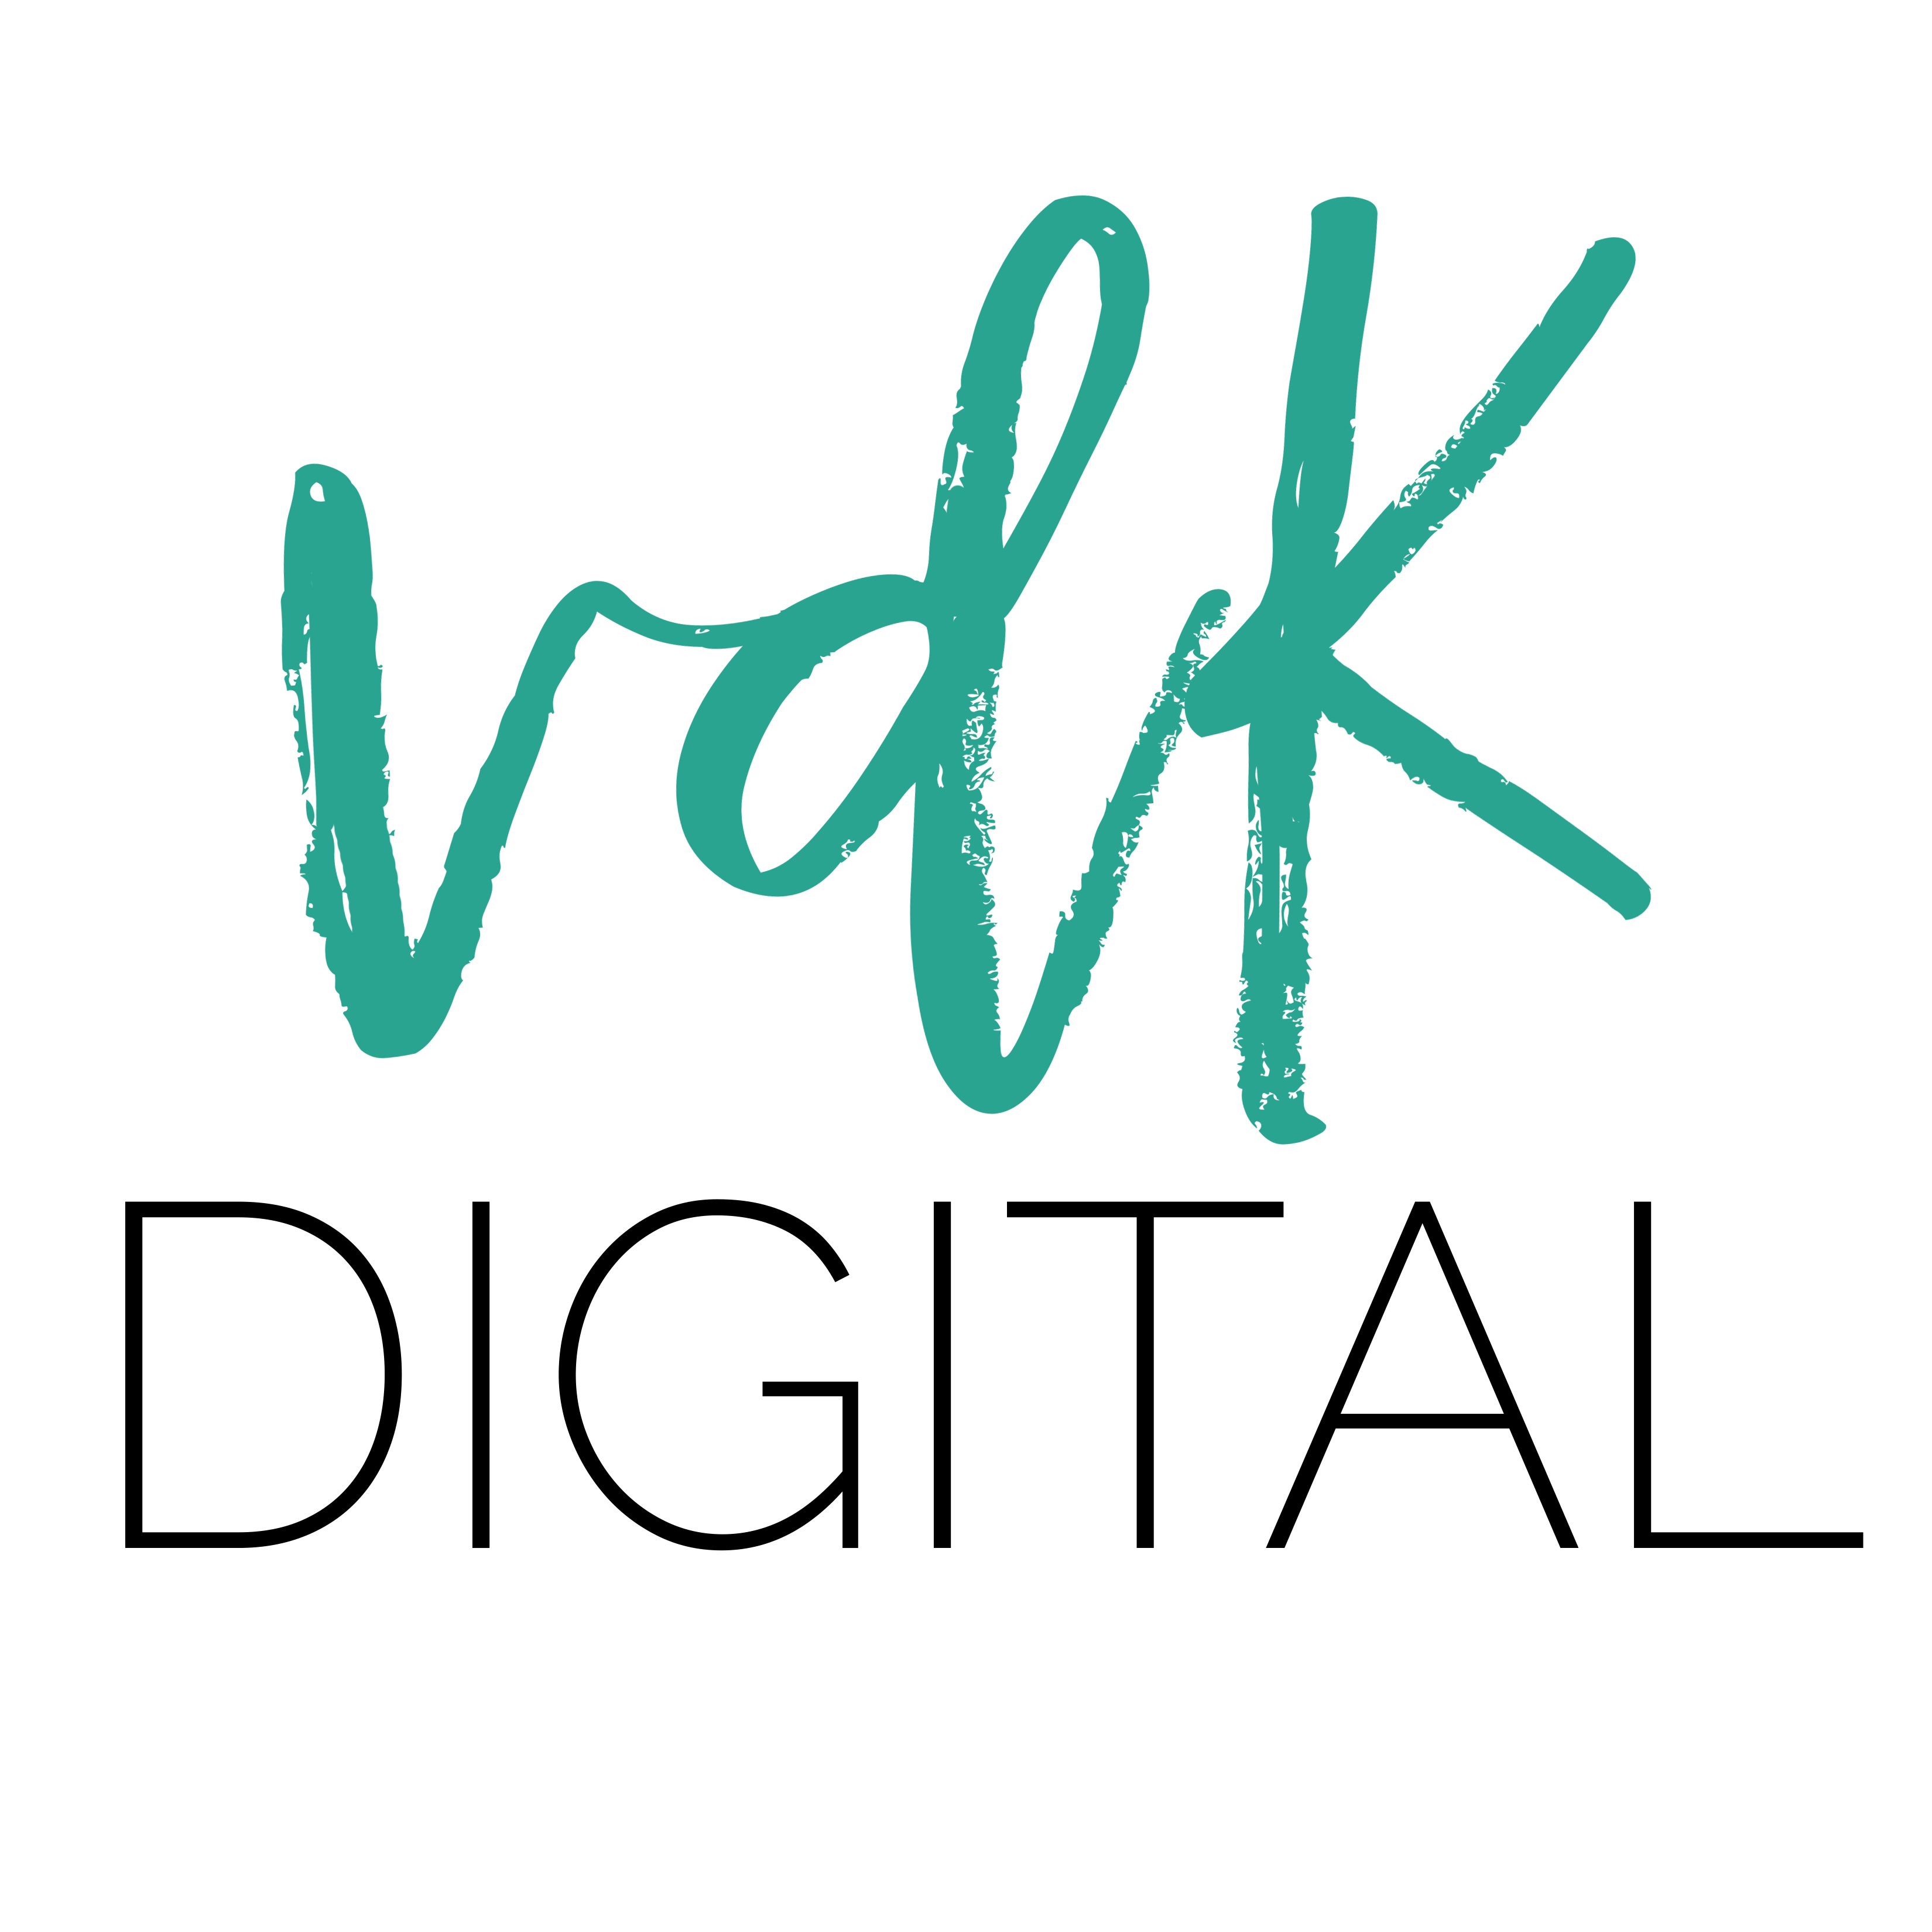 VDK Digital